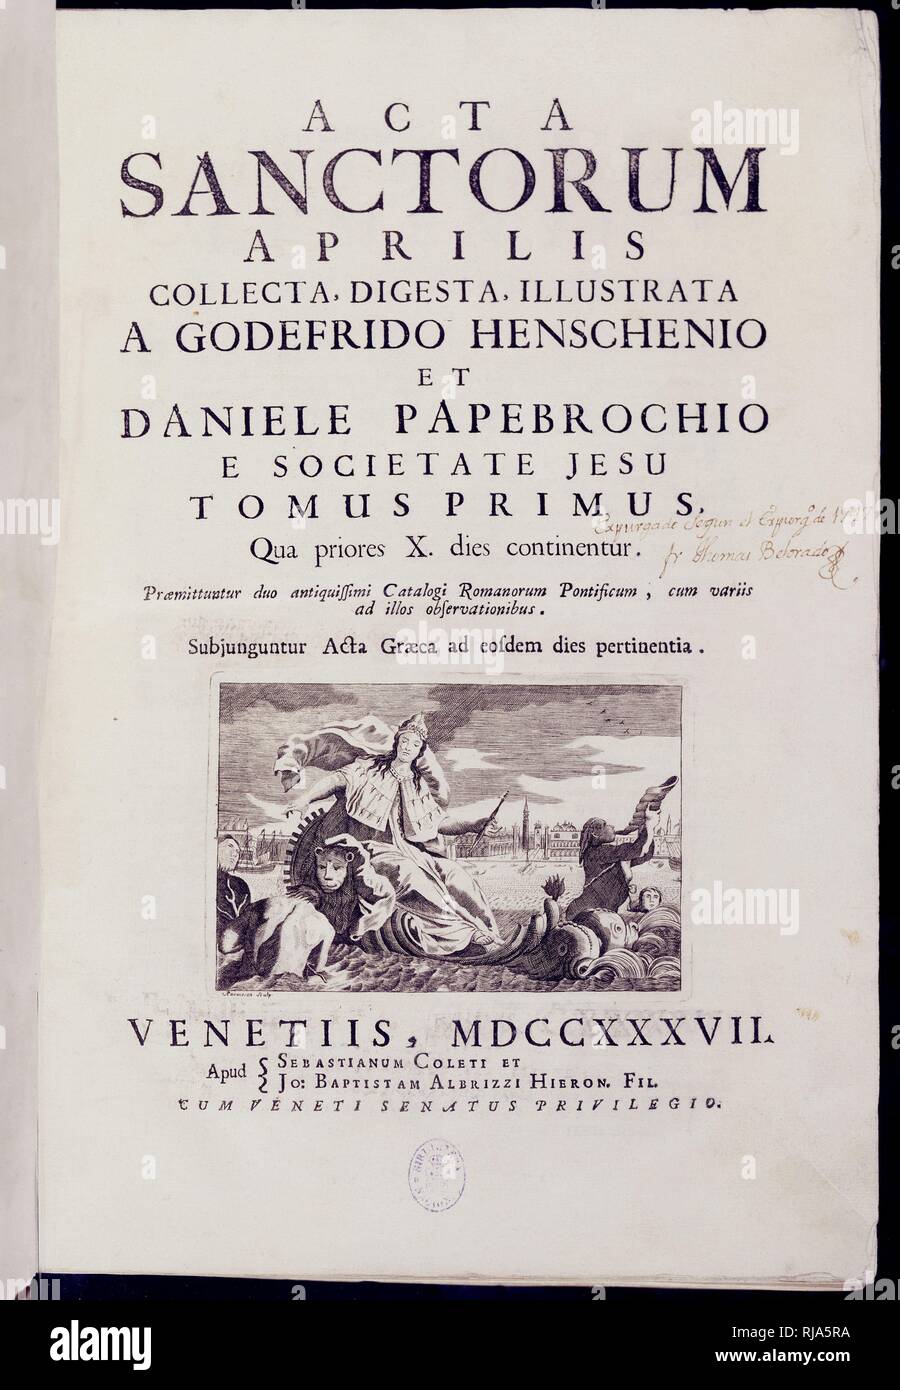 ACTA SANCTORUM-1737-PORTADA. Author: PAPEBROCHIO DANIELE. Location: BIBLIOTECA NACIONAL-COLECCION. MADRID. SPAIN. Stock Photo